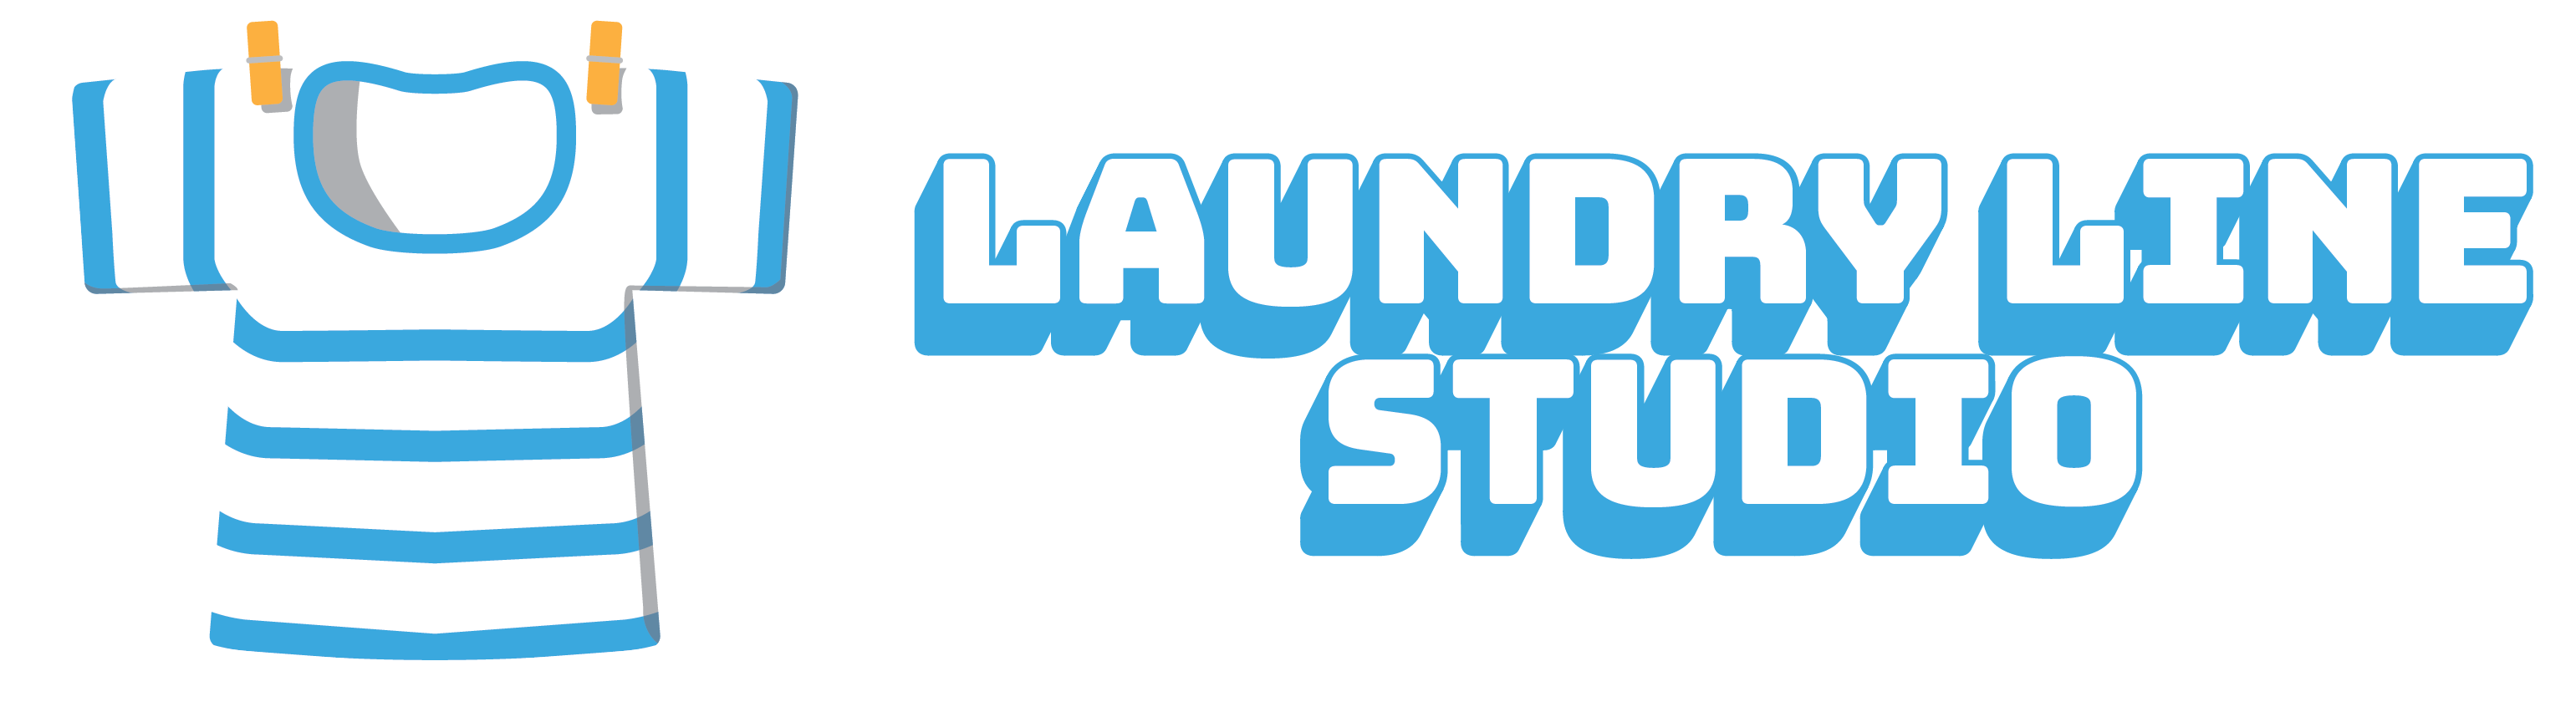 Laundry Line Studio - Logo- 2022 - Light